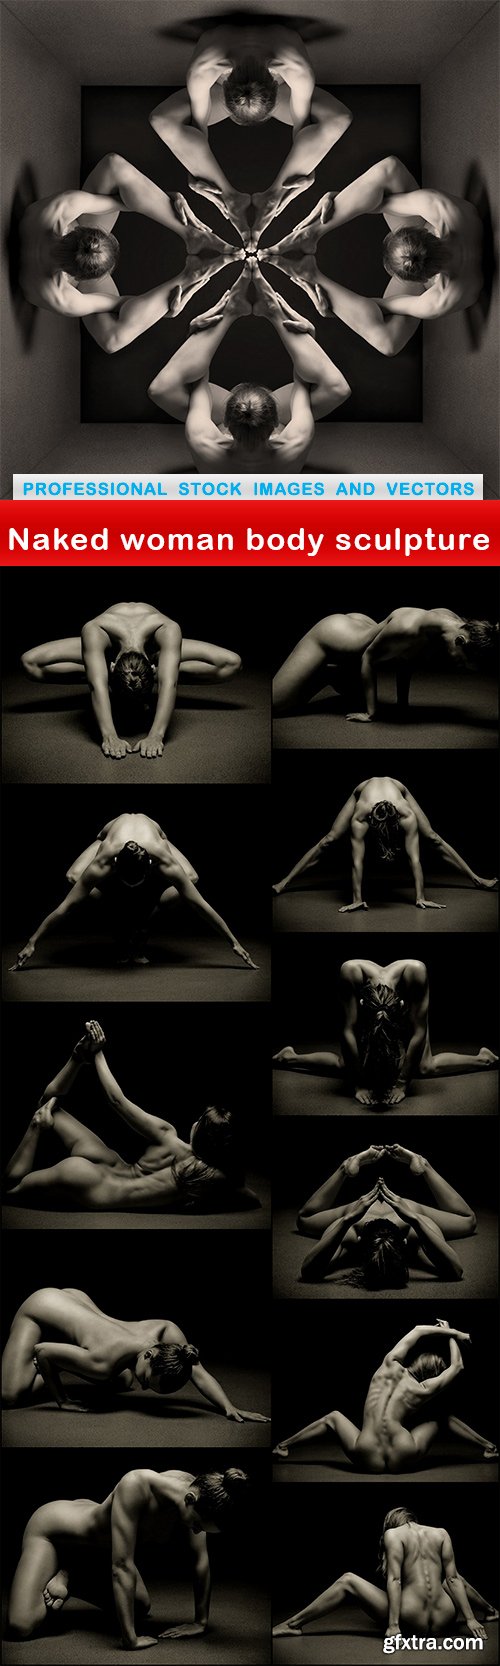 Naked woman body sculpture - 12 UHQ JPEG